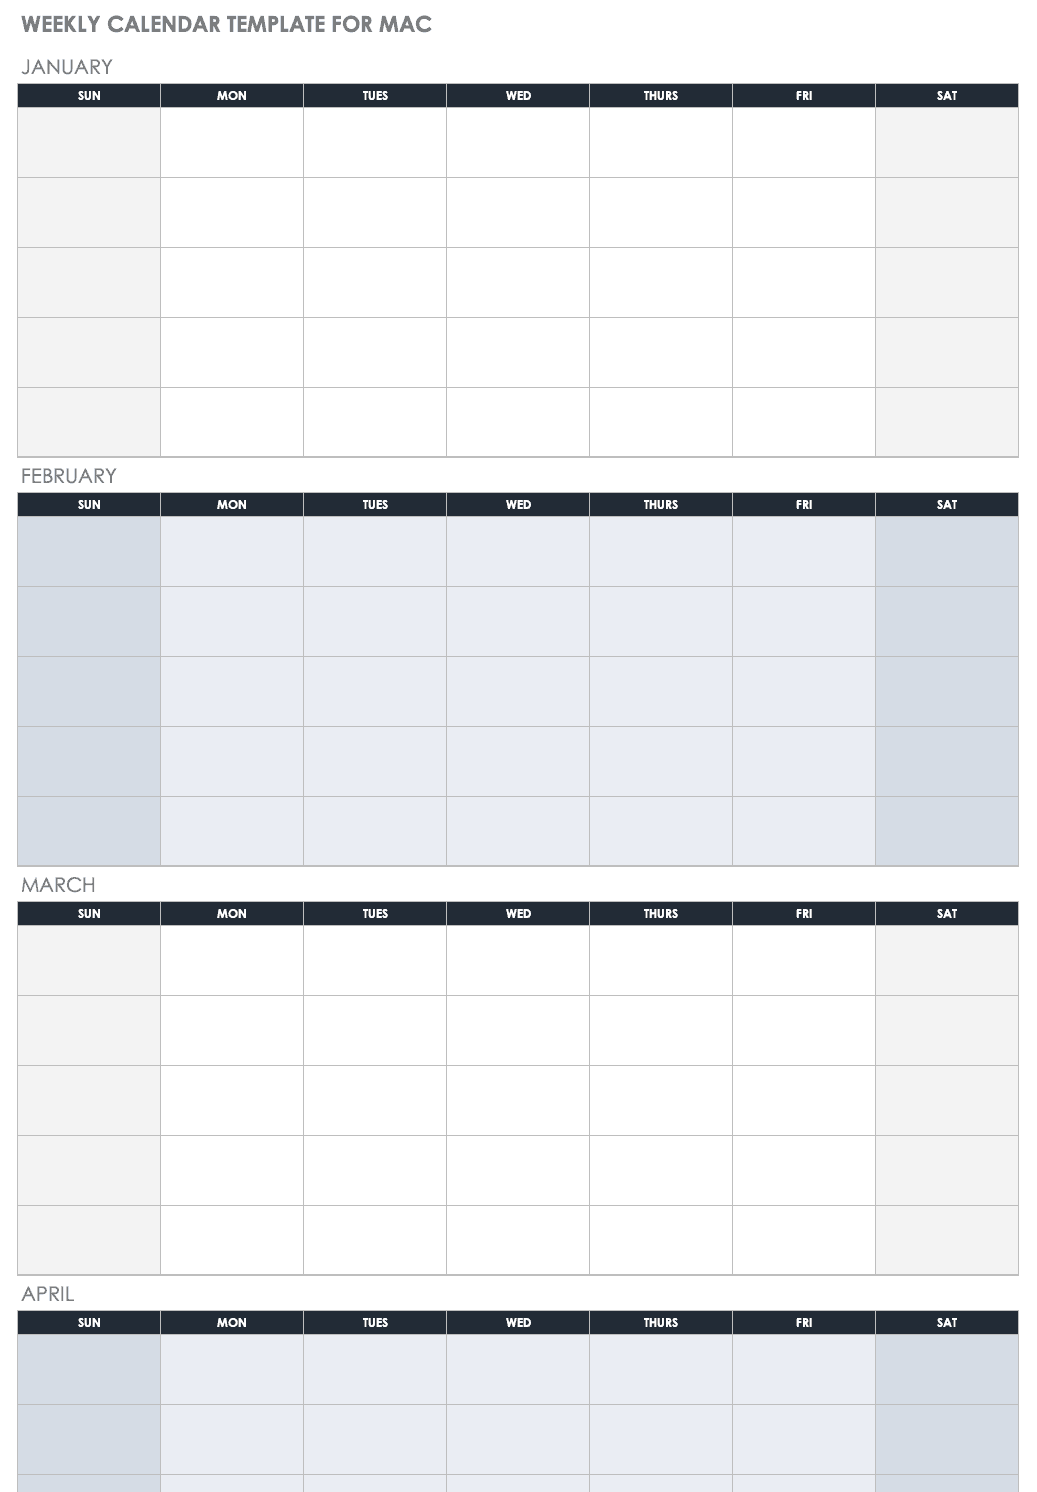 Weekly Calendar Template for Mac